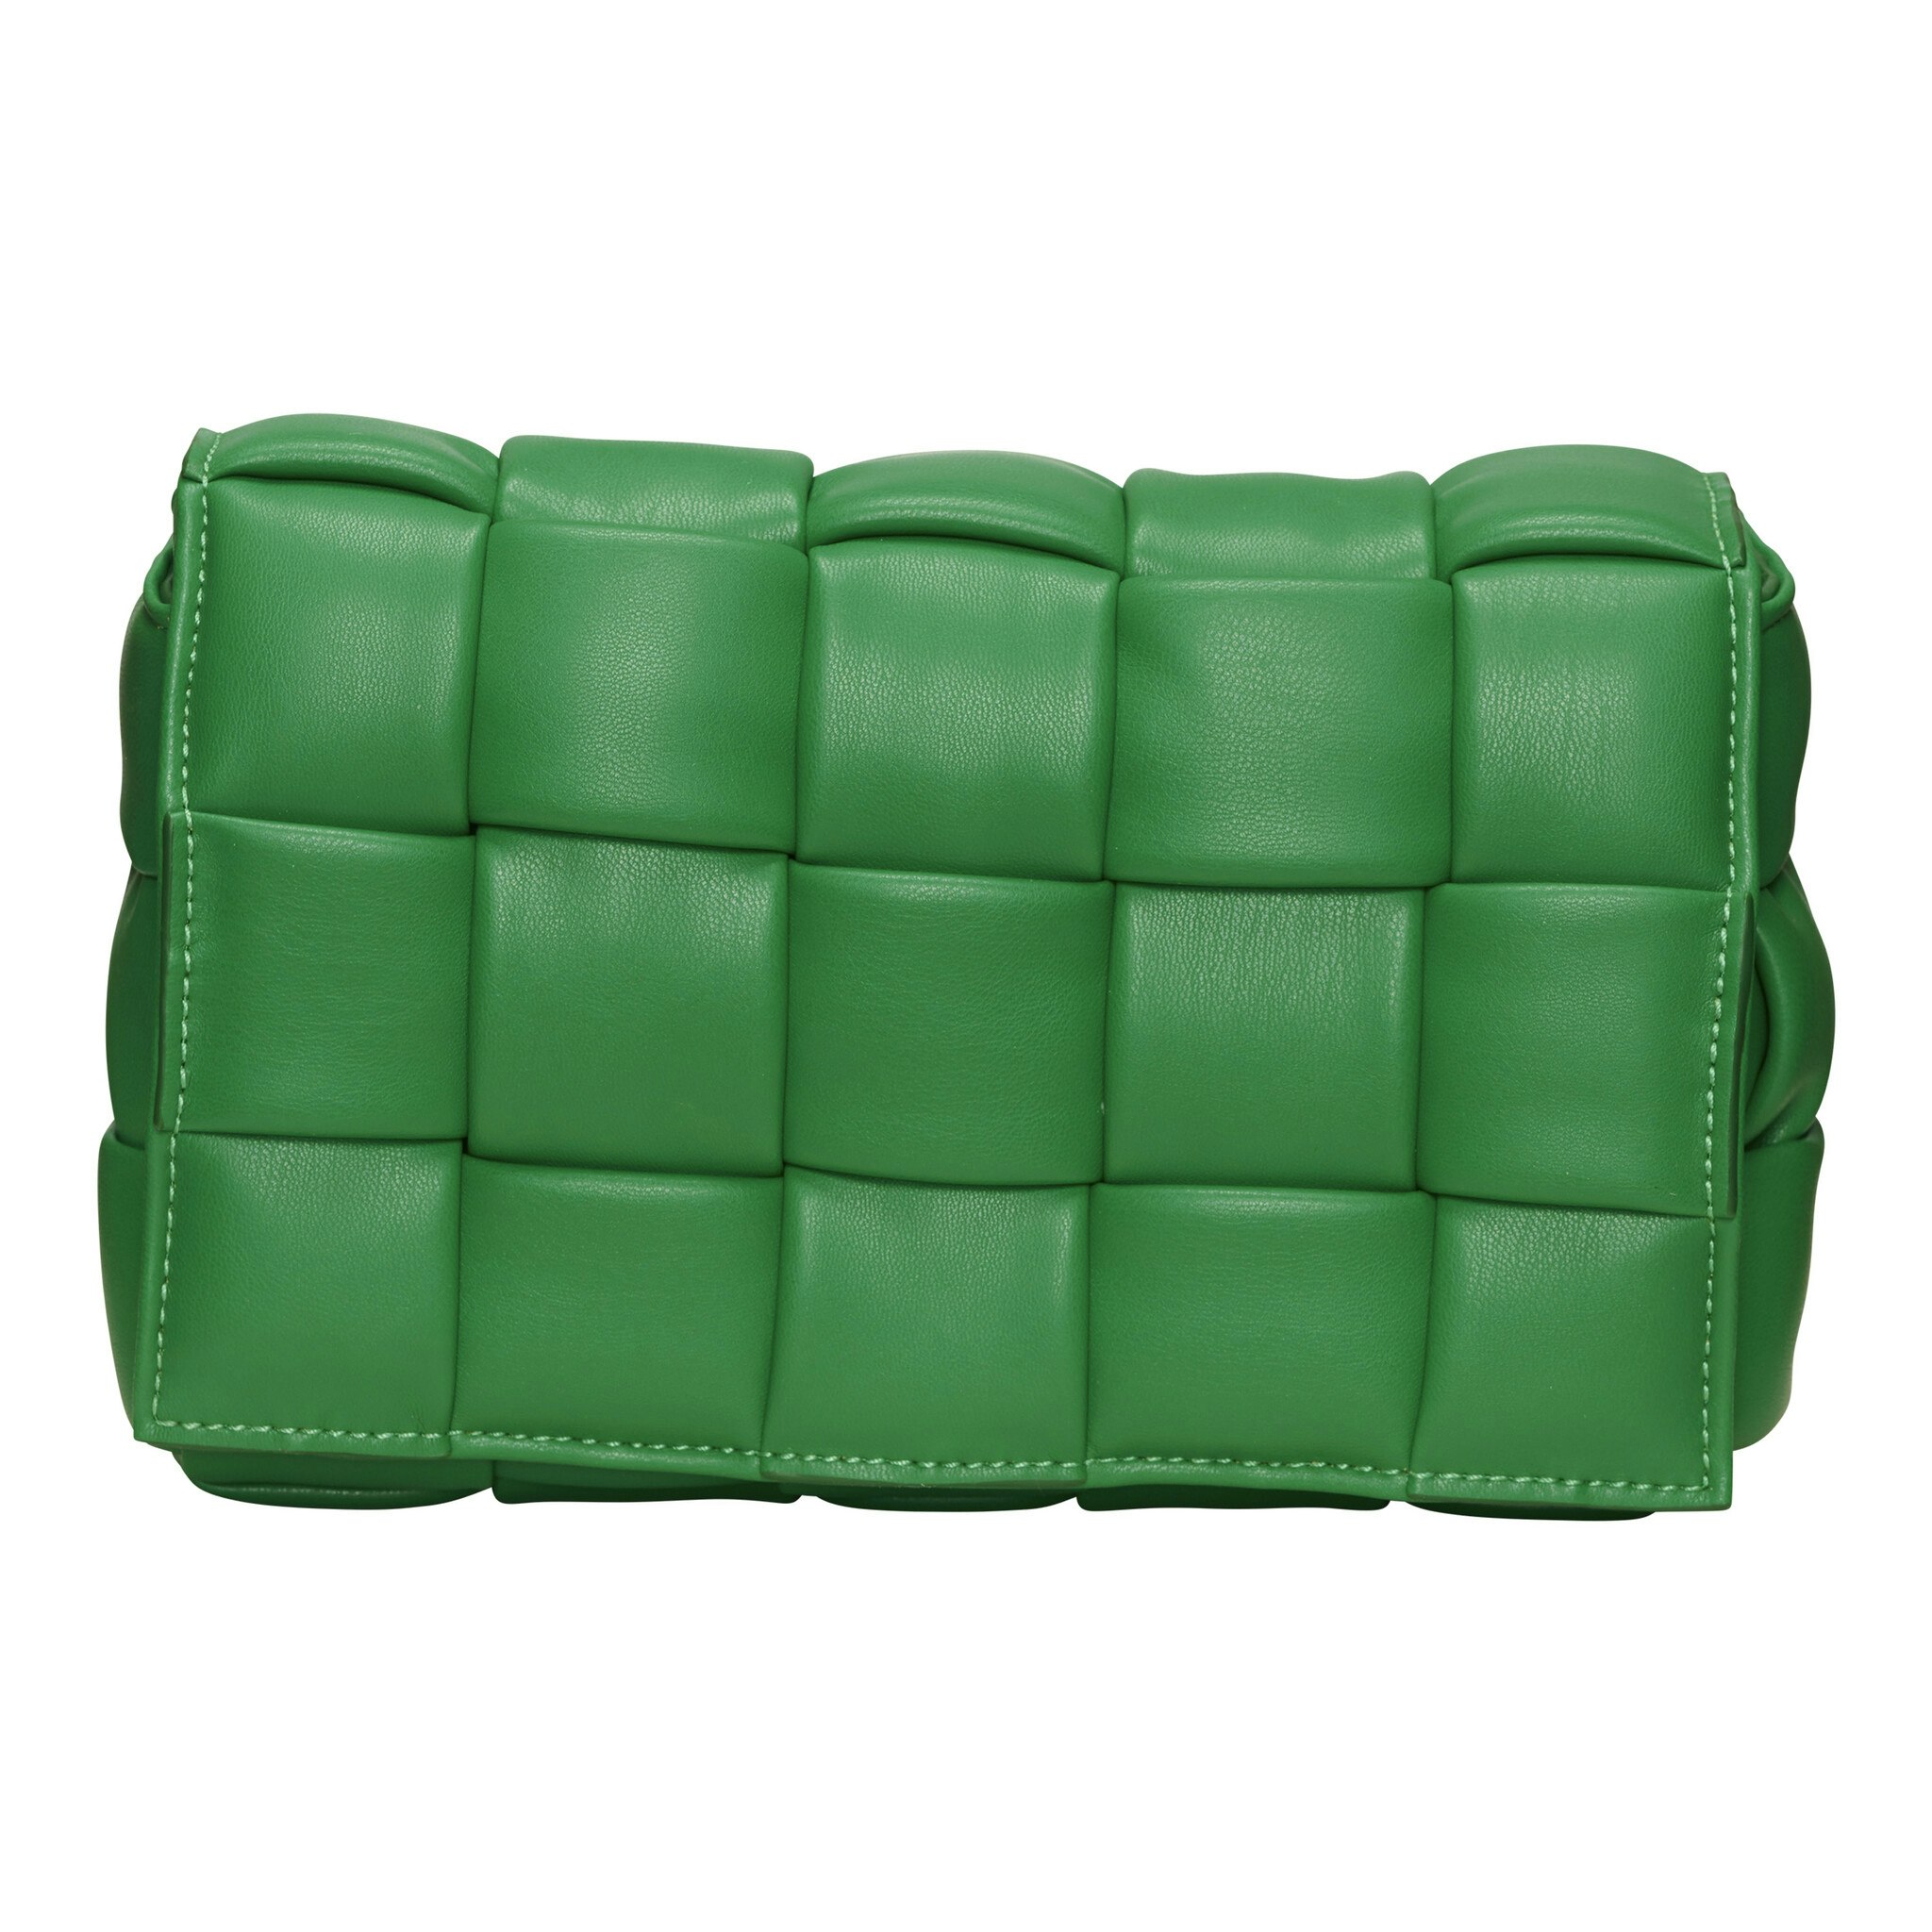 Noella - Brick Bag, Bright Green